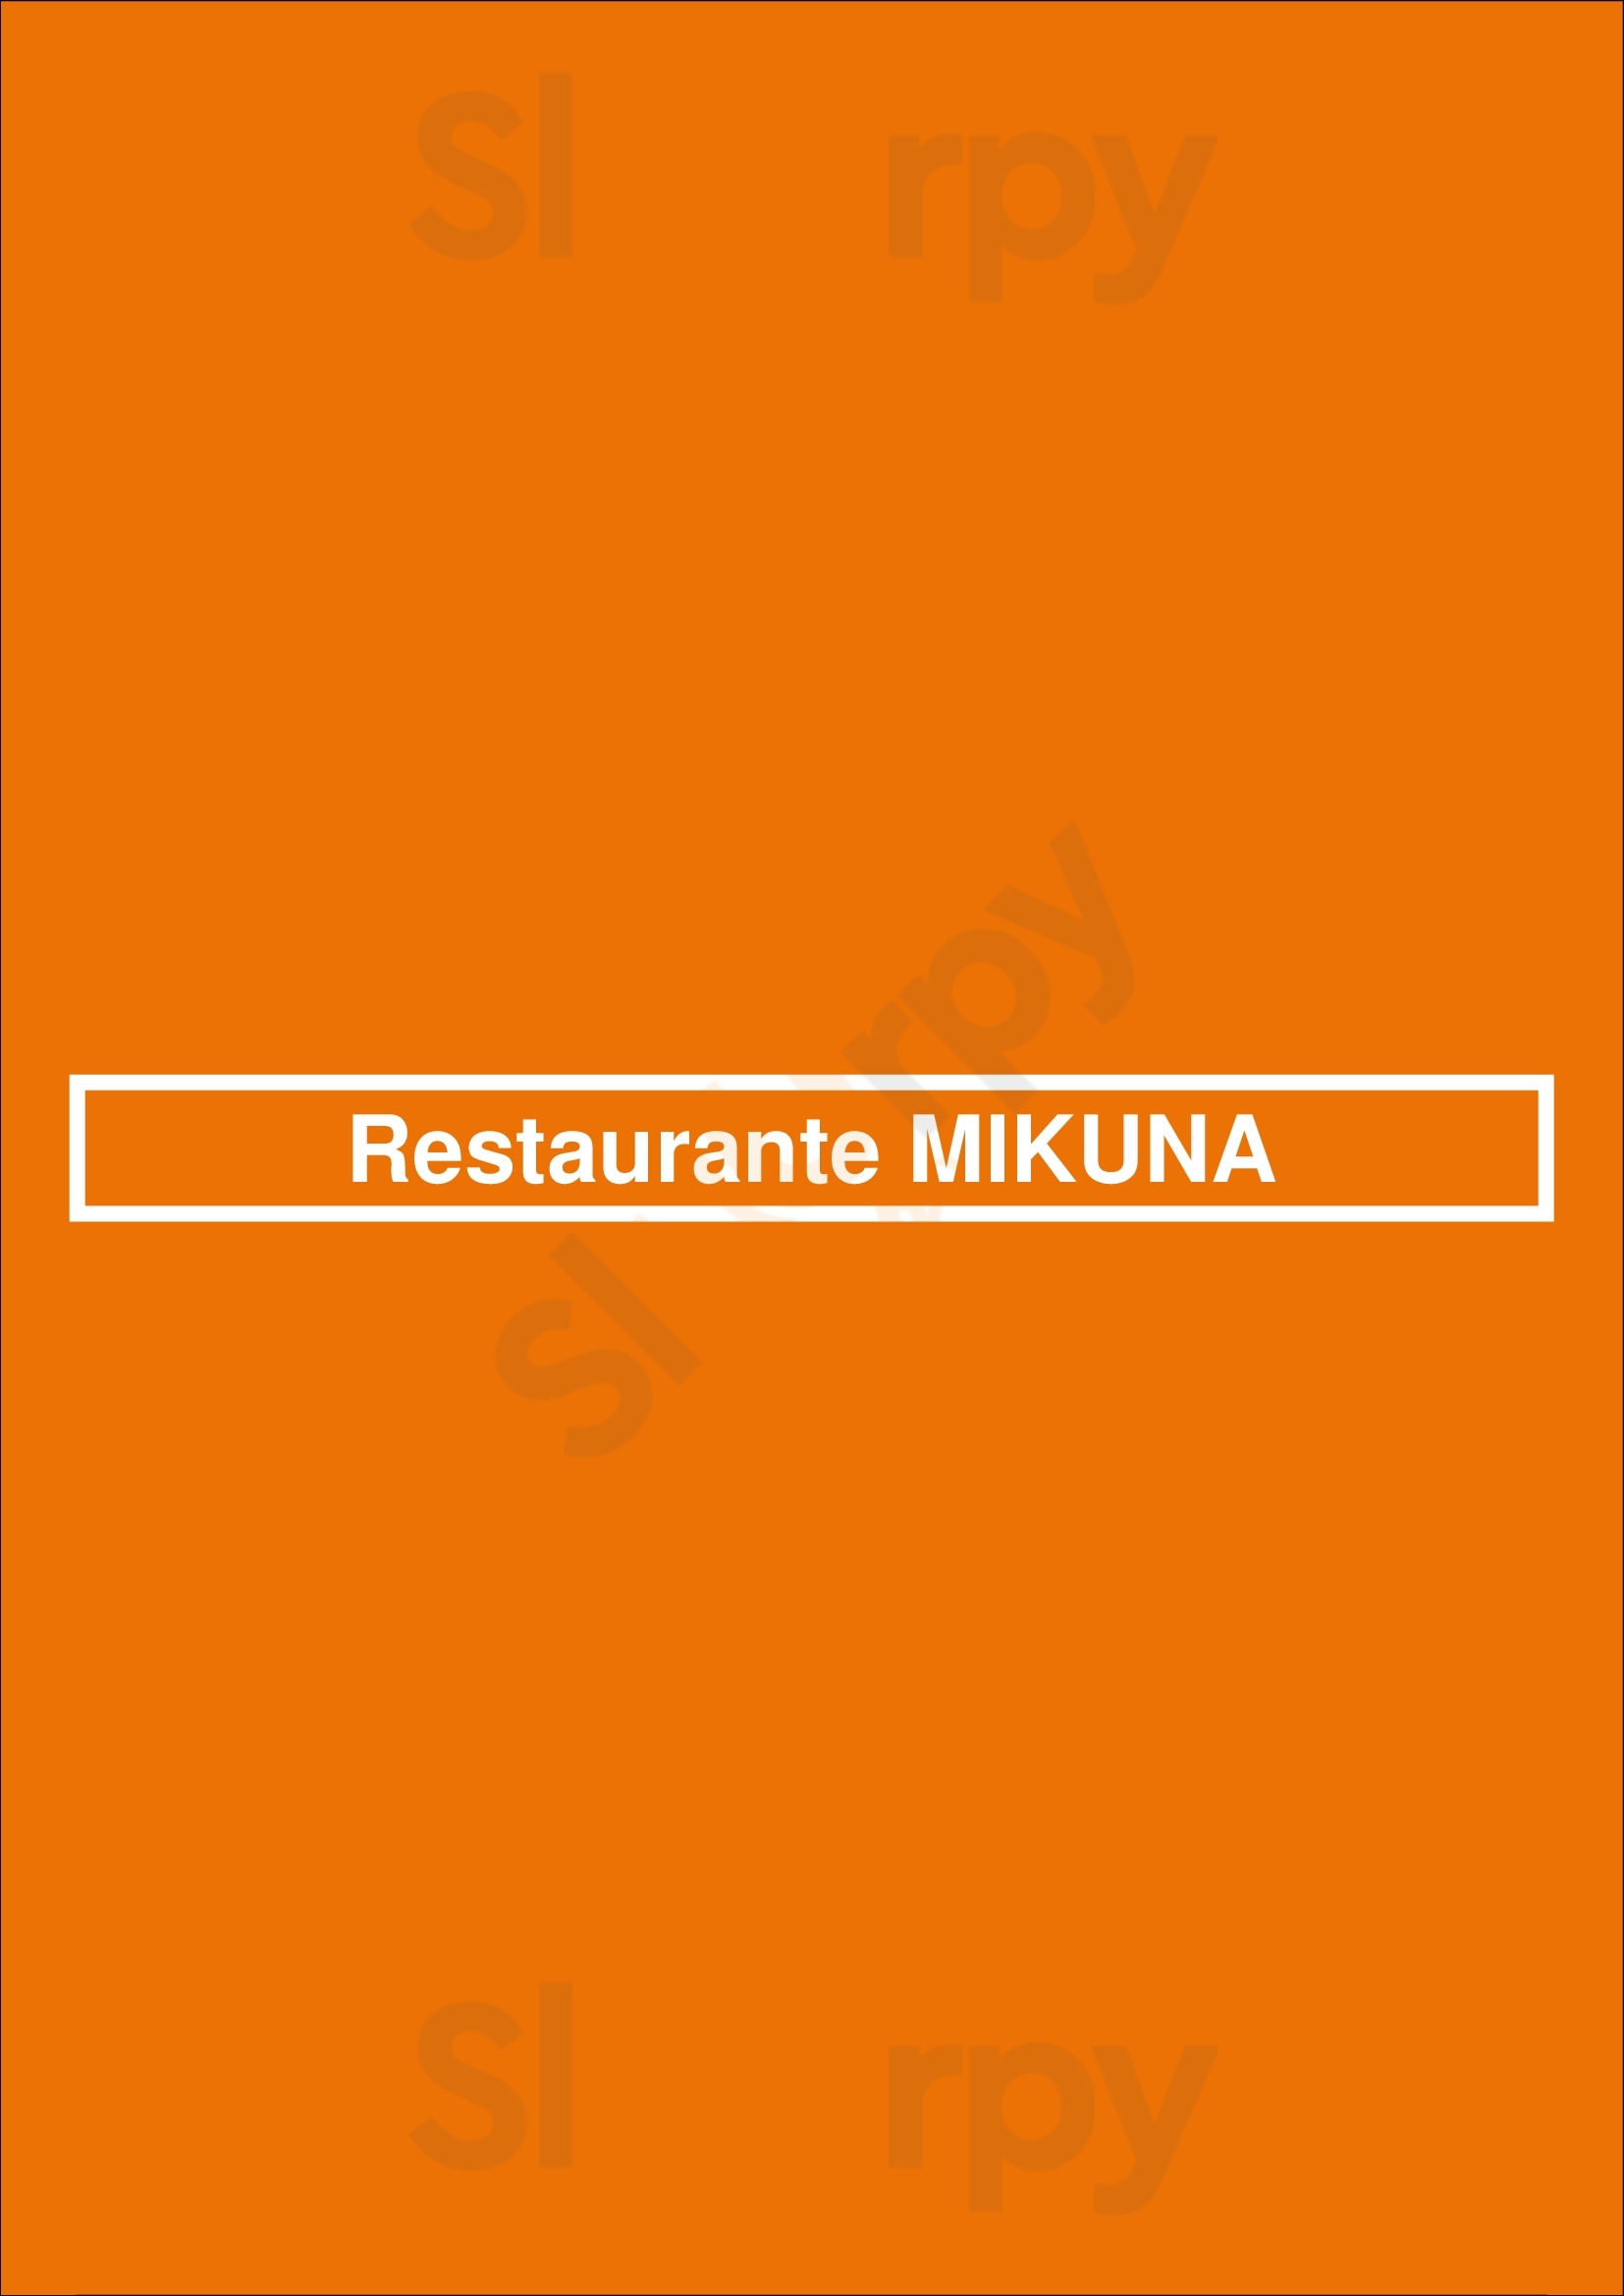 Restaurante Mikuna Madrid Menu - 1